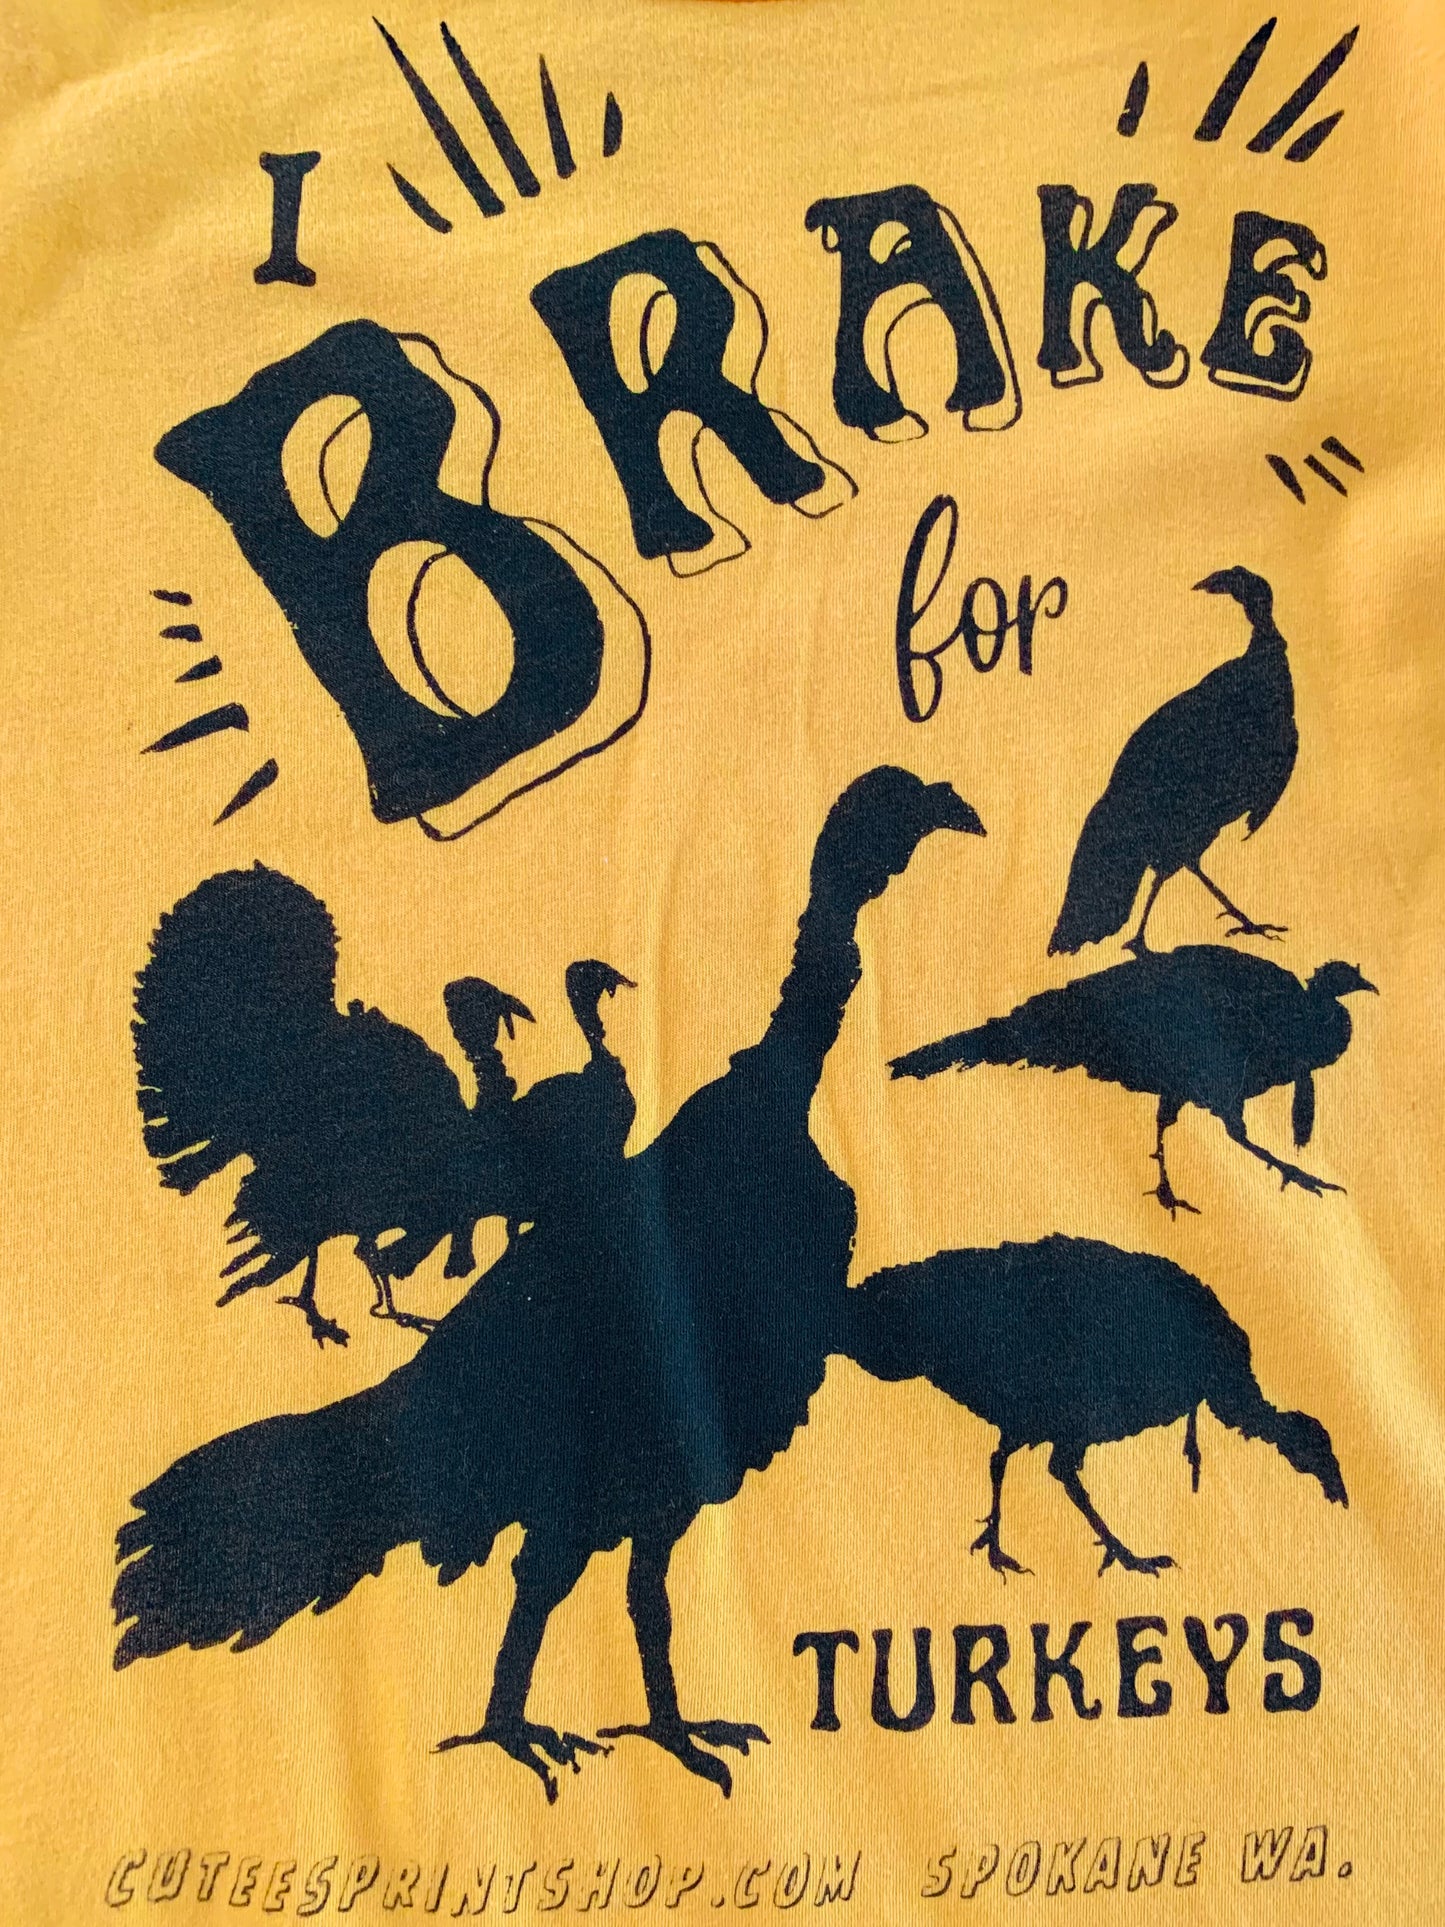 "I Brake For Turkeys" Every-body Fit